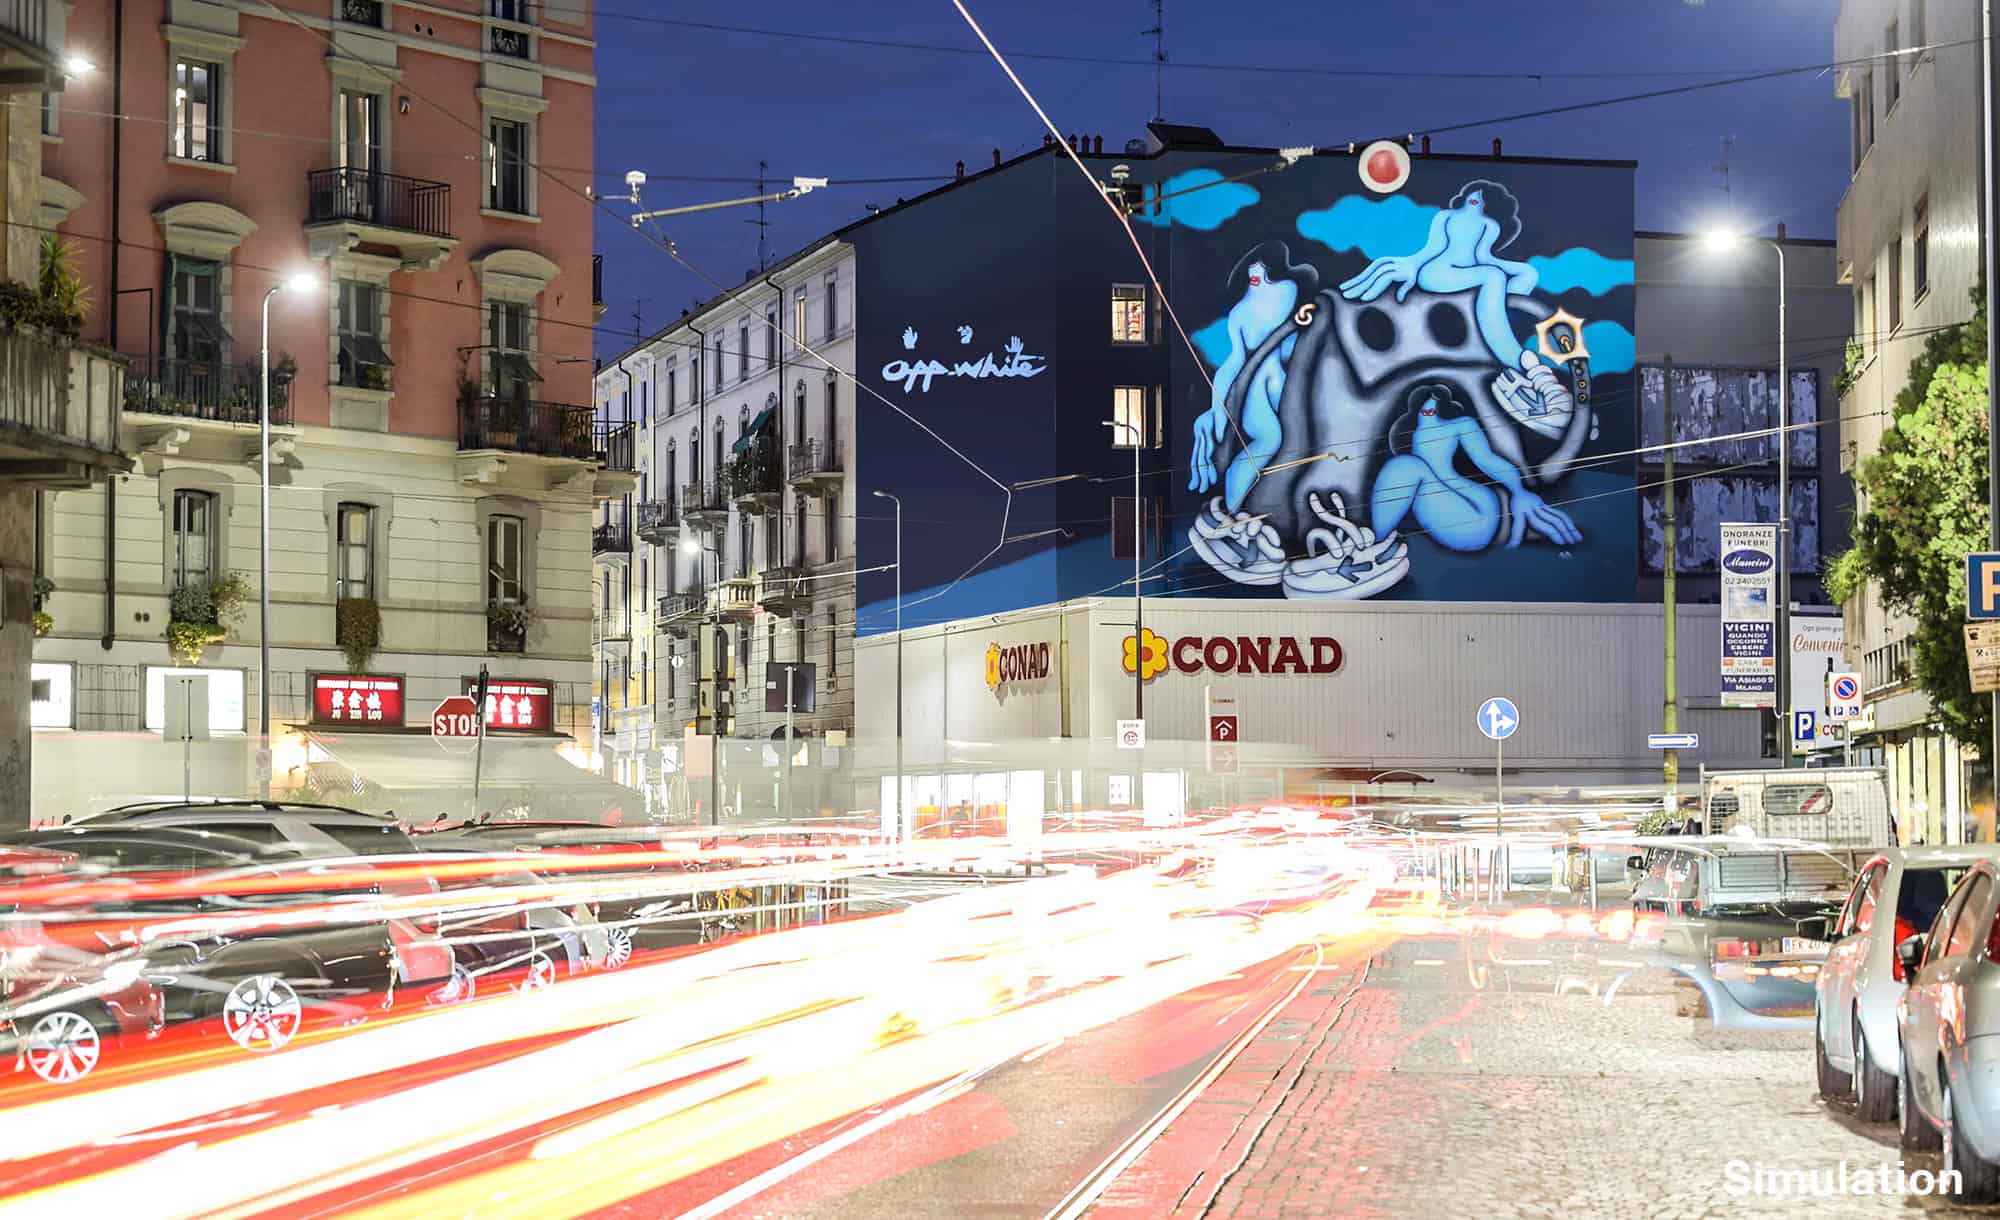 Mural Nolo in Milan by Streetvox